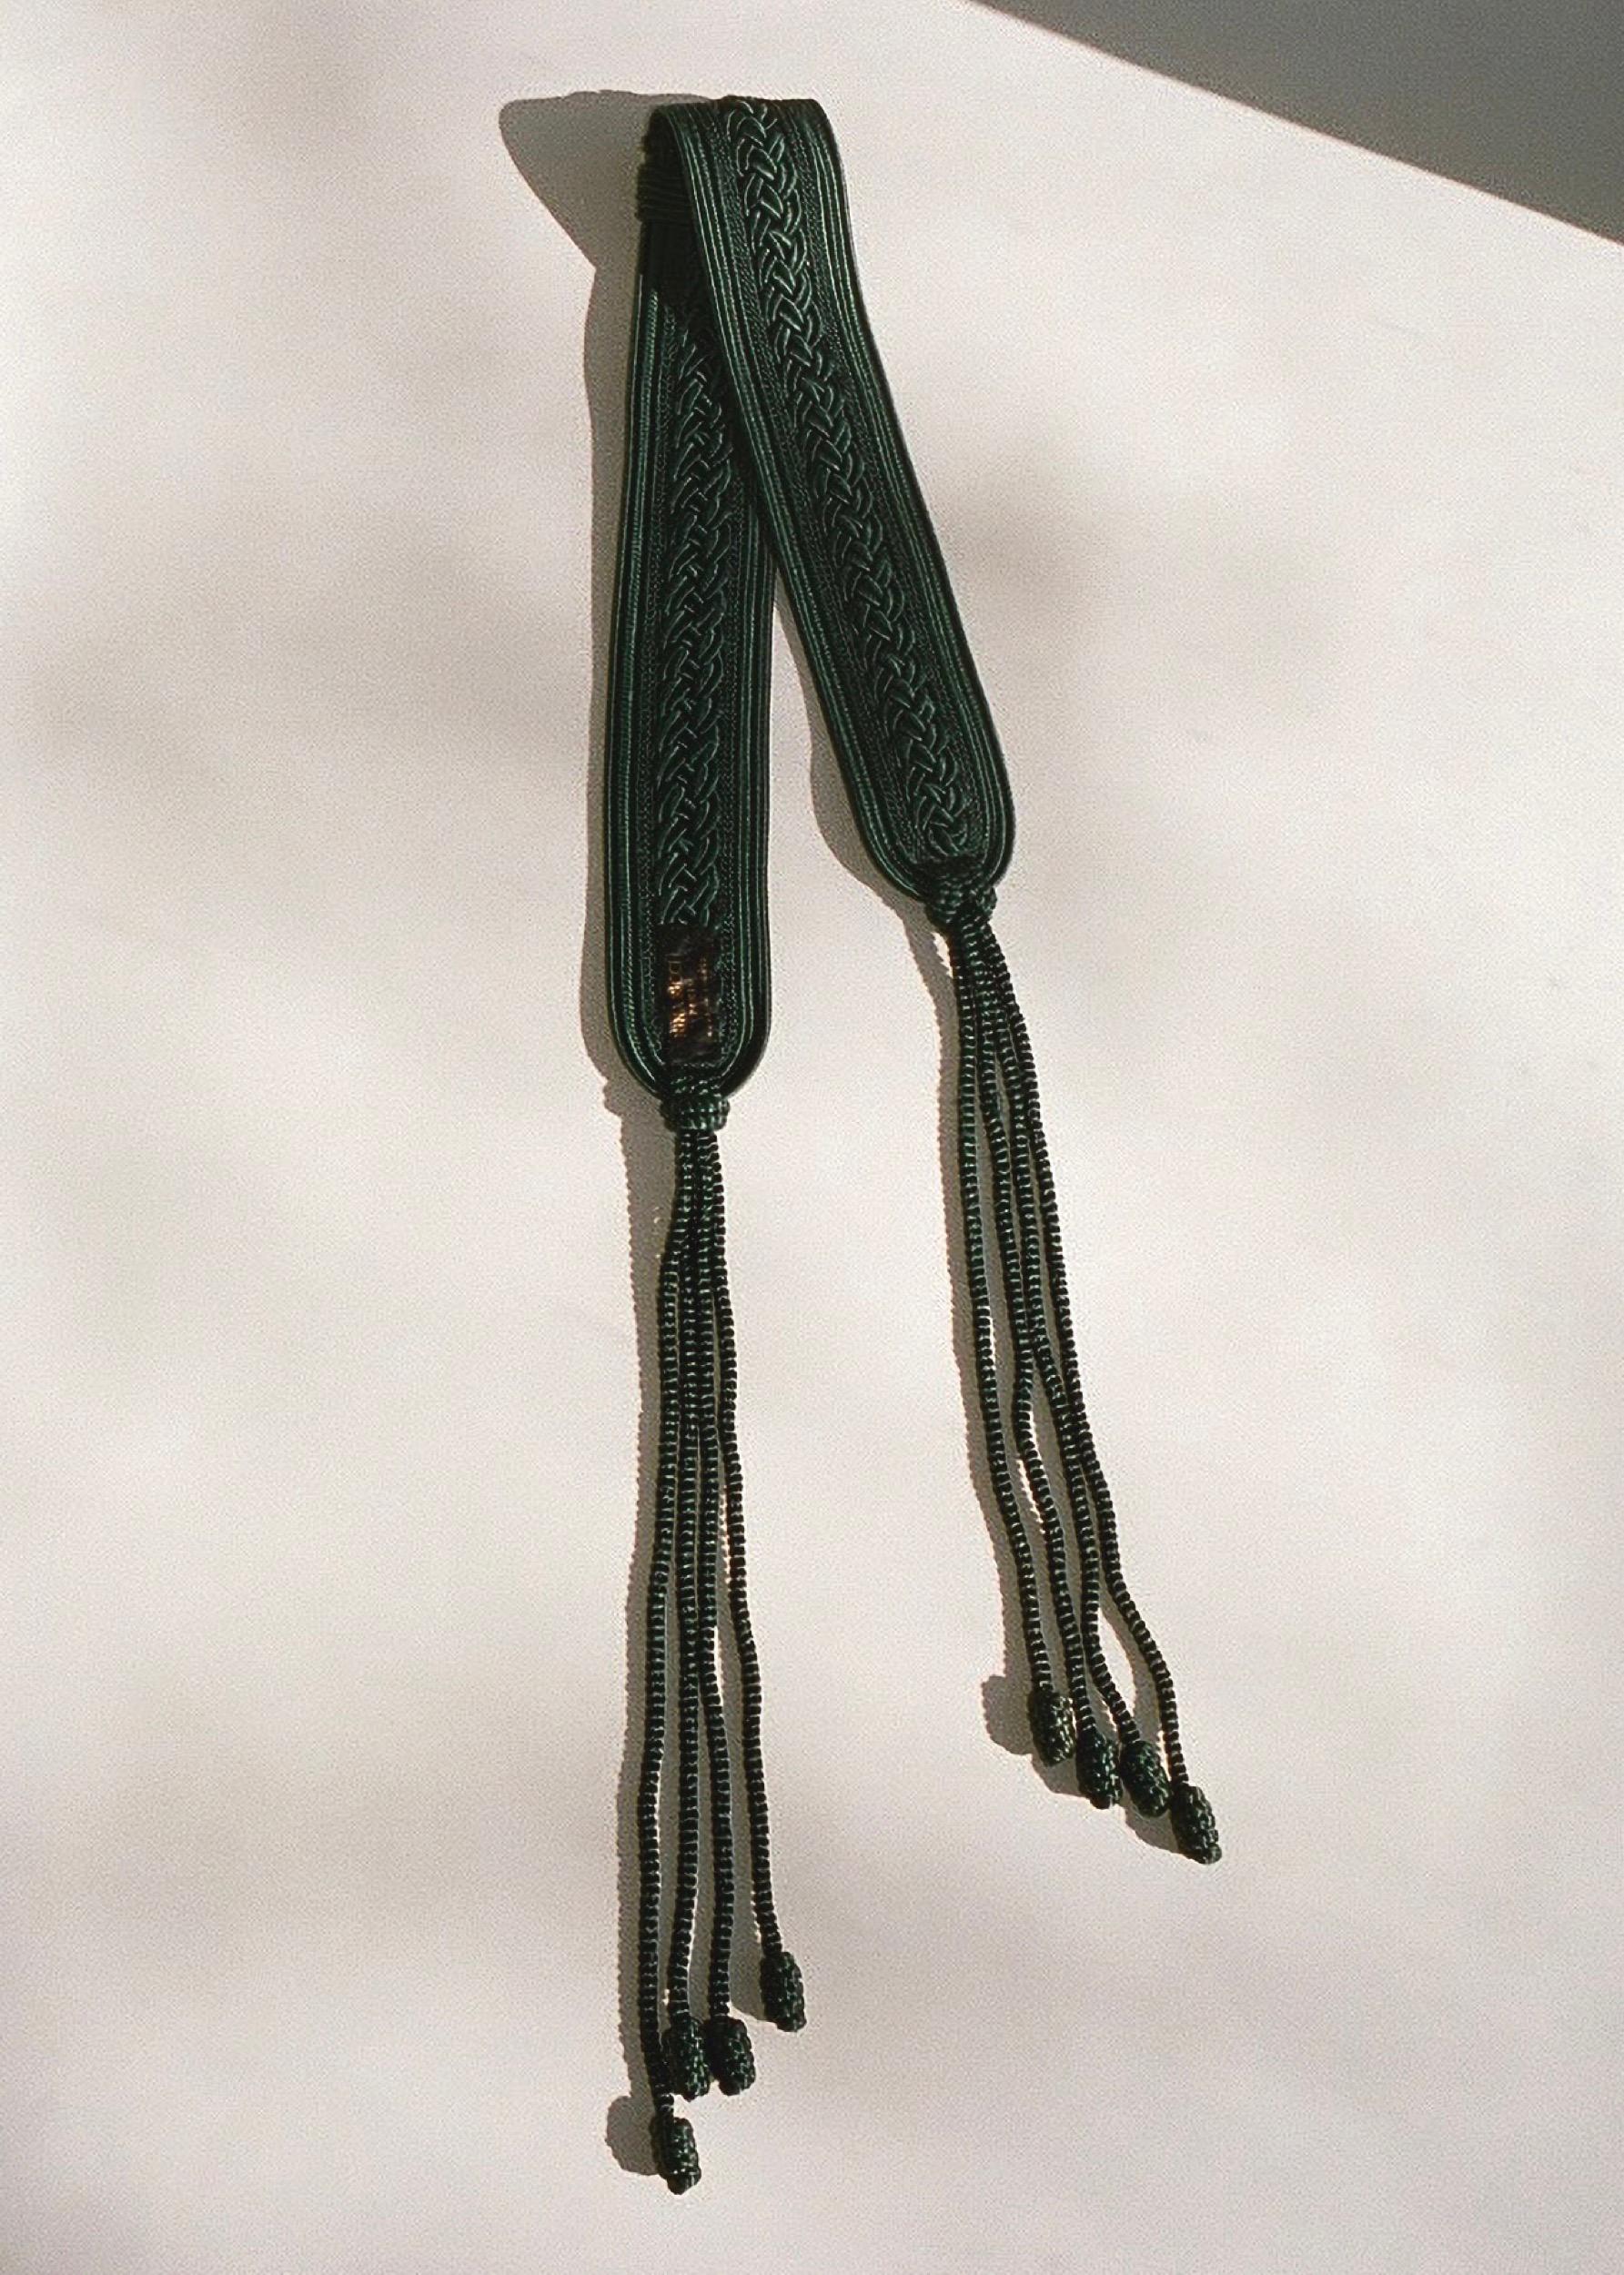 Nina Ricci Passamenterie Belt with Tassels Dark Green 1990's For Sale 14